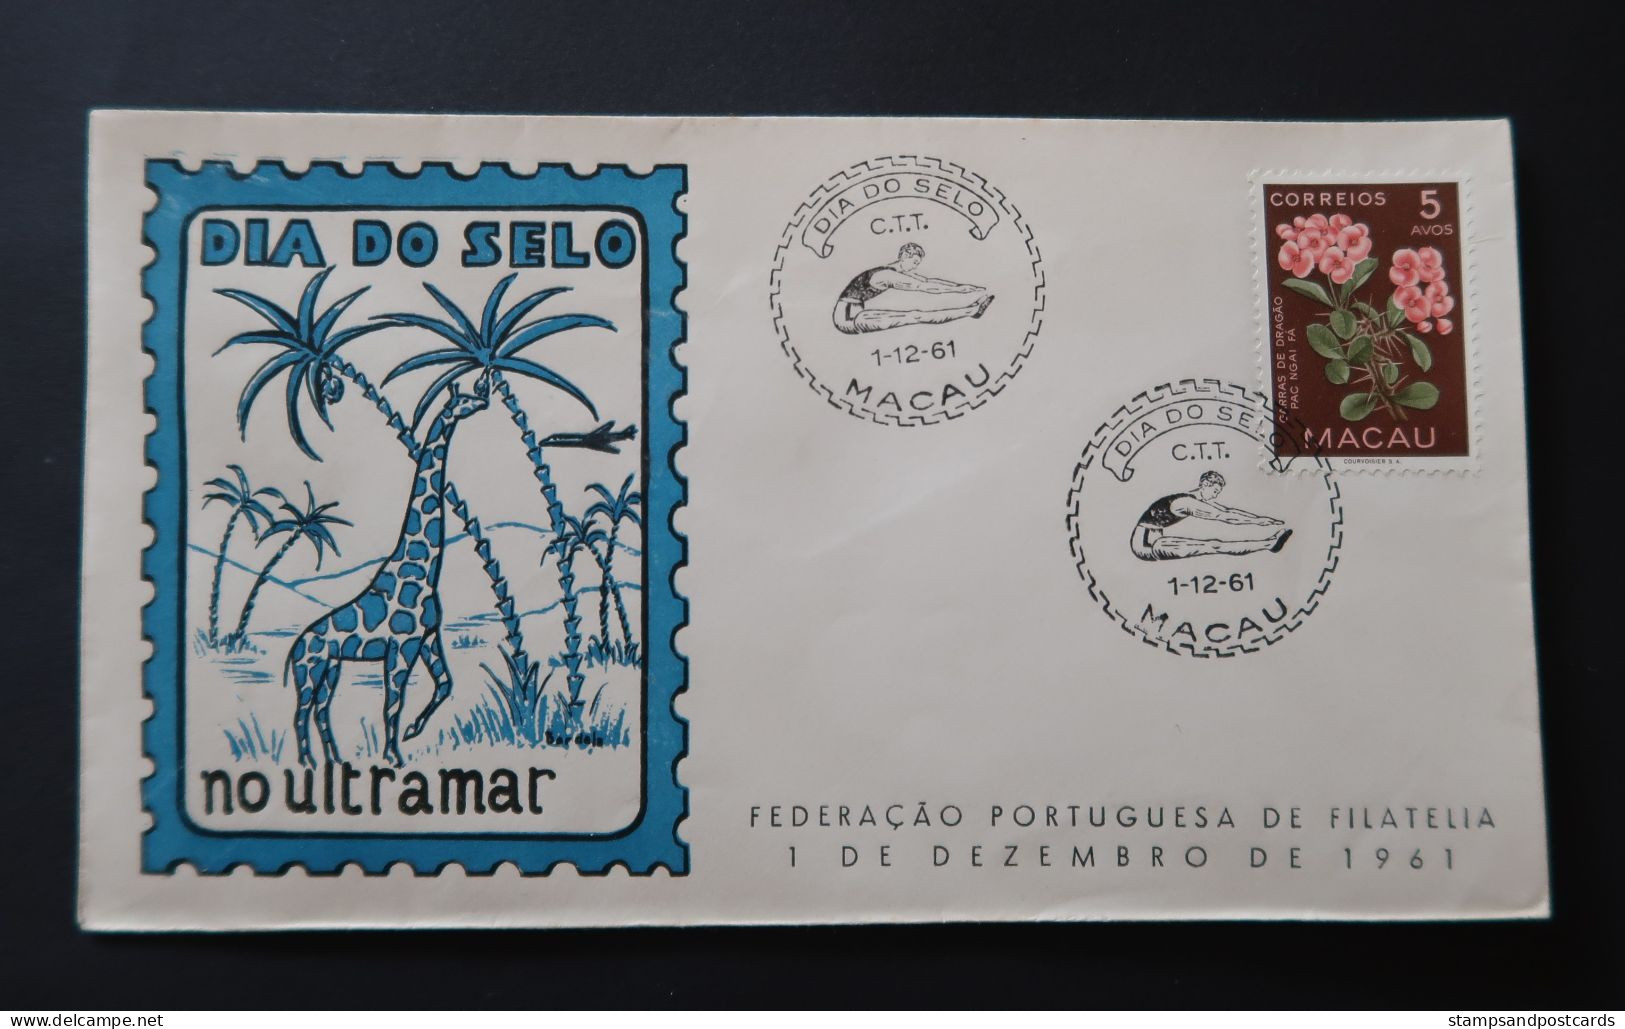 Macao Portugal Cachet Commémoratif Journée Du Timbre 1961 Macau Event Postmark Stamp Day Girafe Giraffe - Lettres & Documents